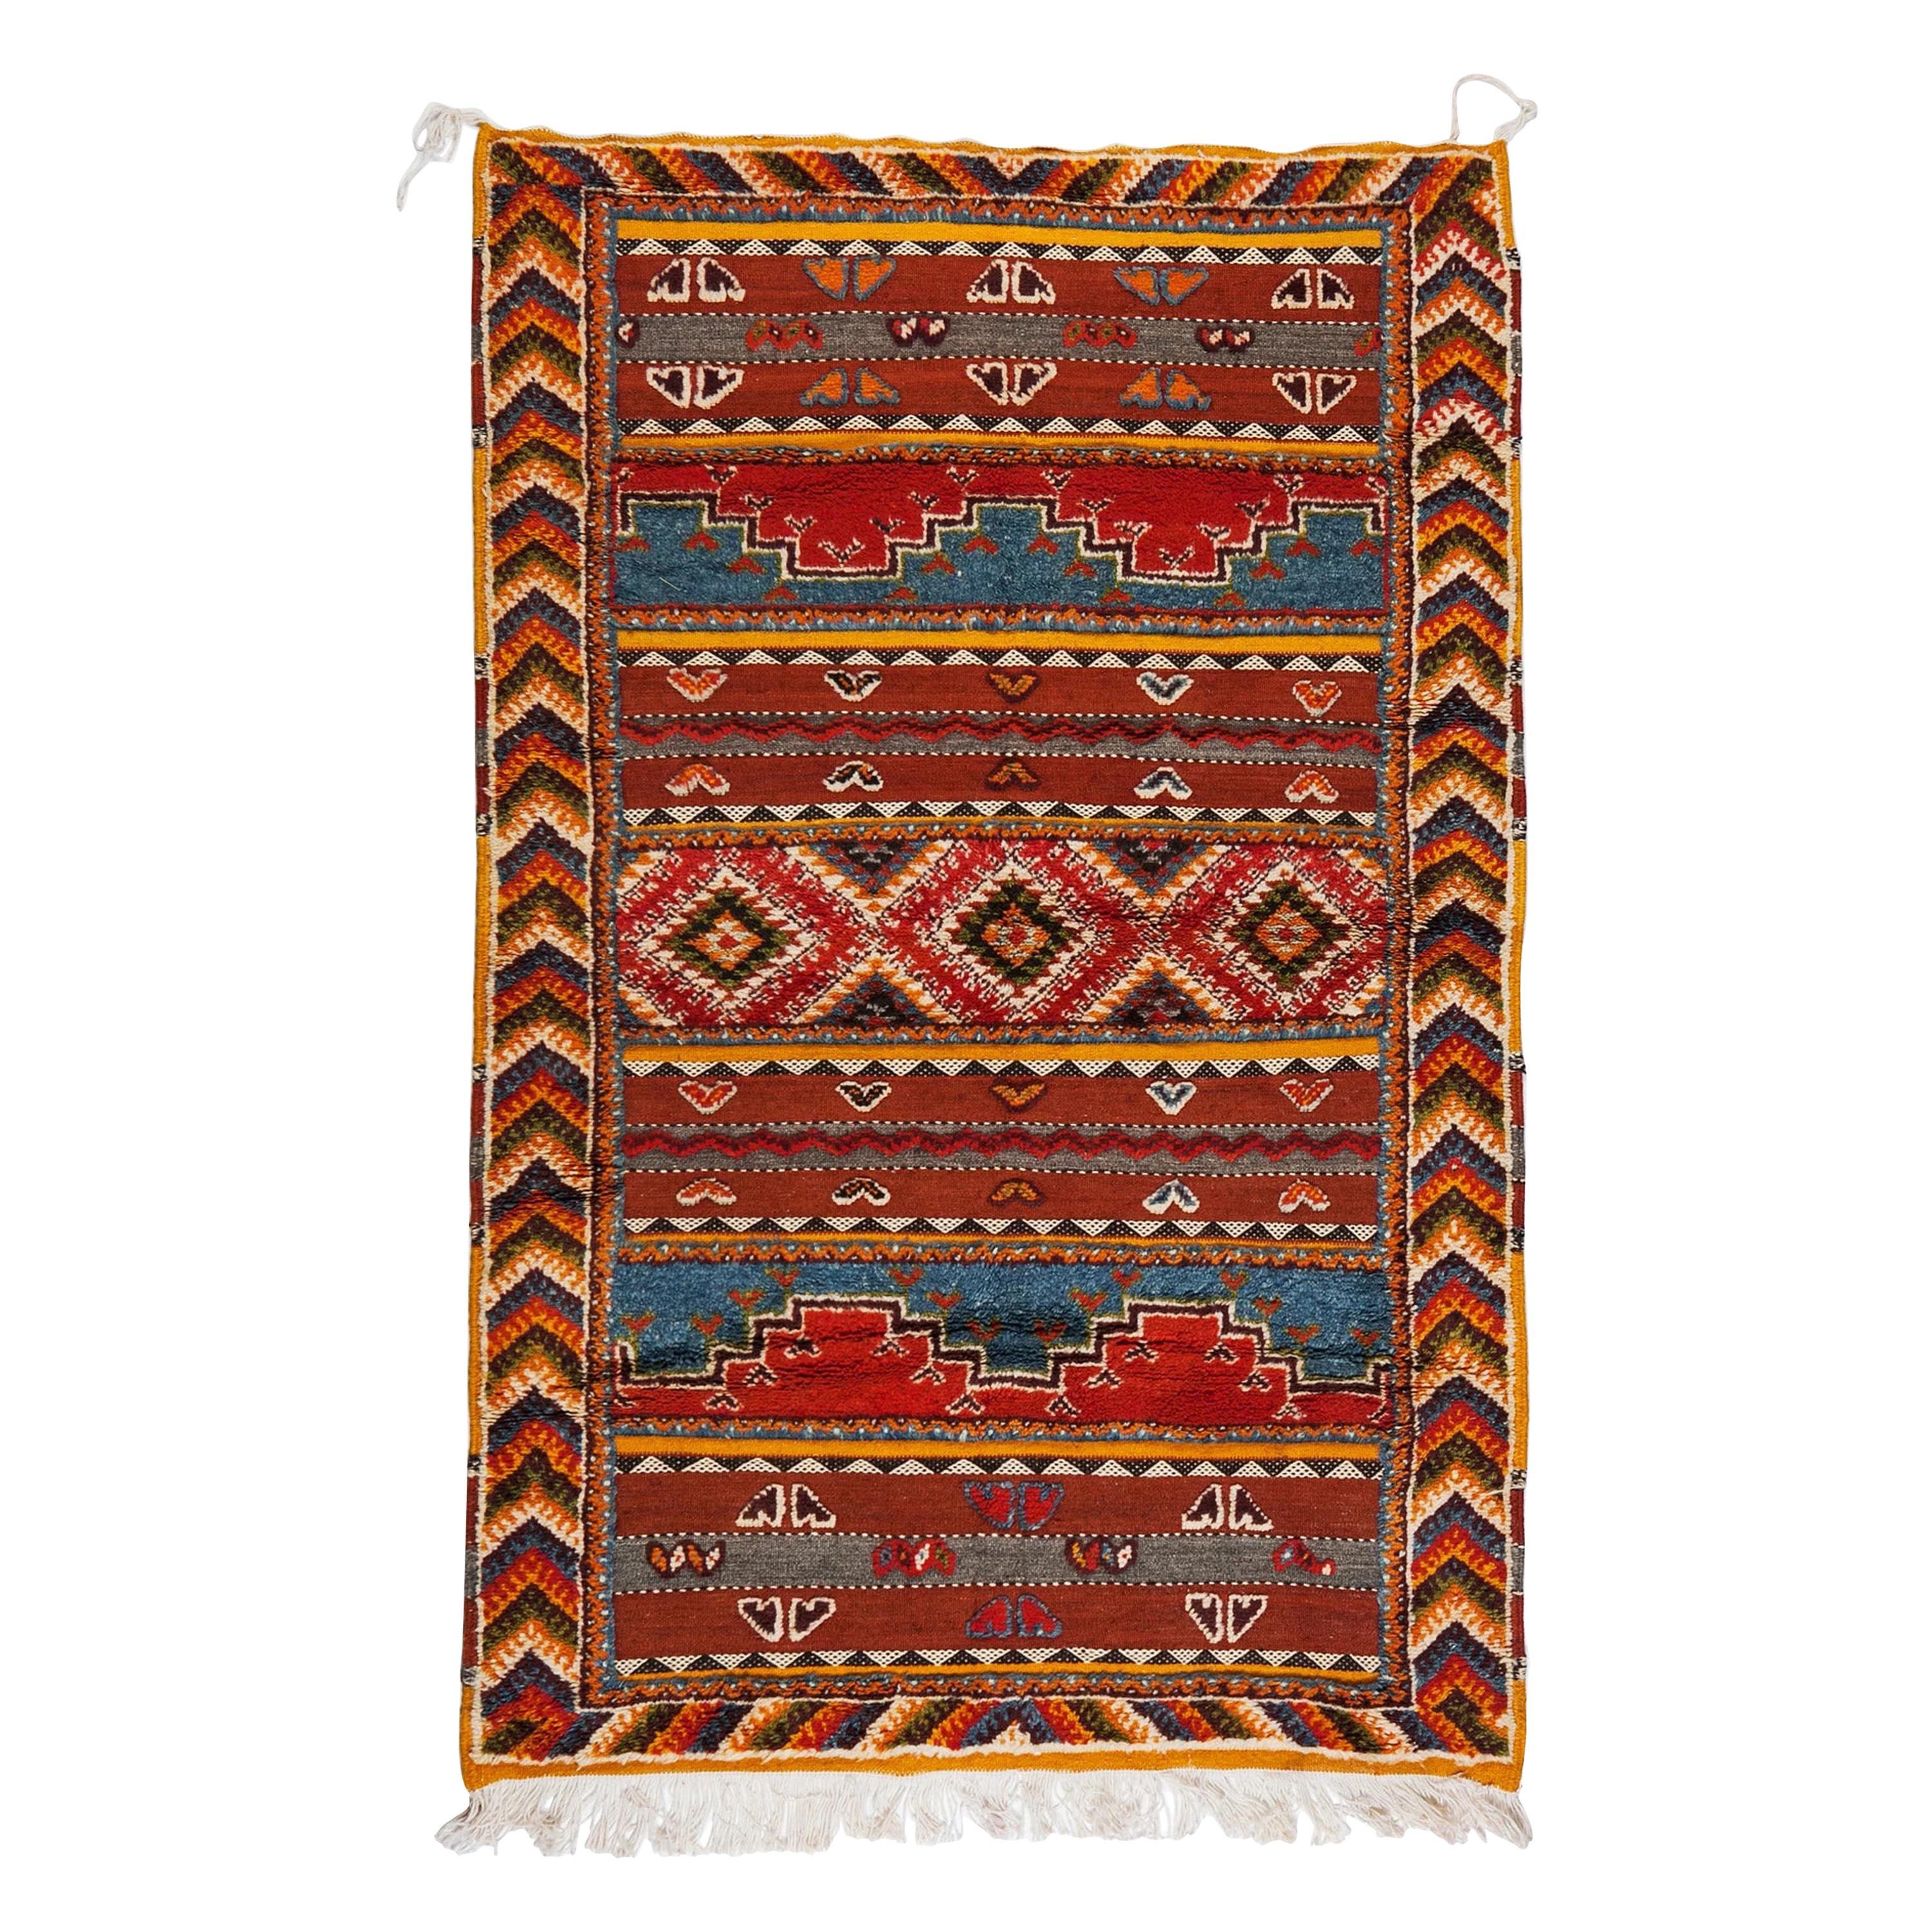 Vintage Moroccan Rug or Carpet, Handwoven Organic Wool Rug with Tribal Design